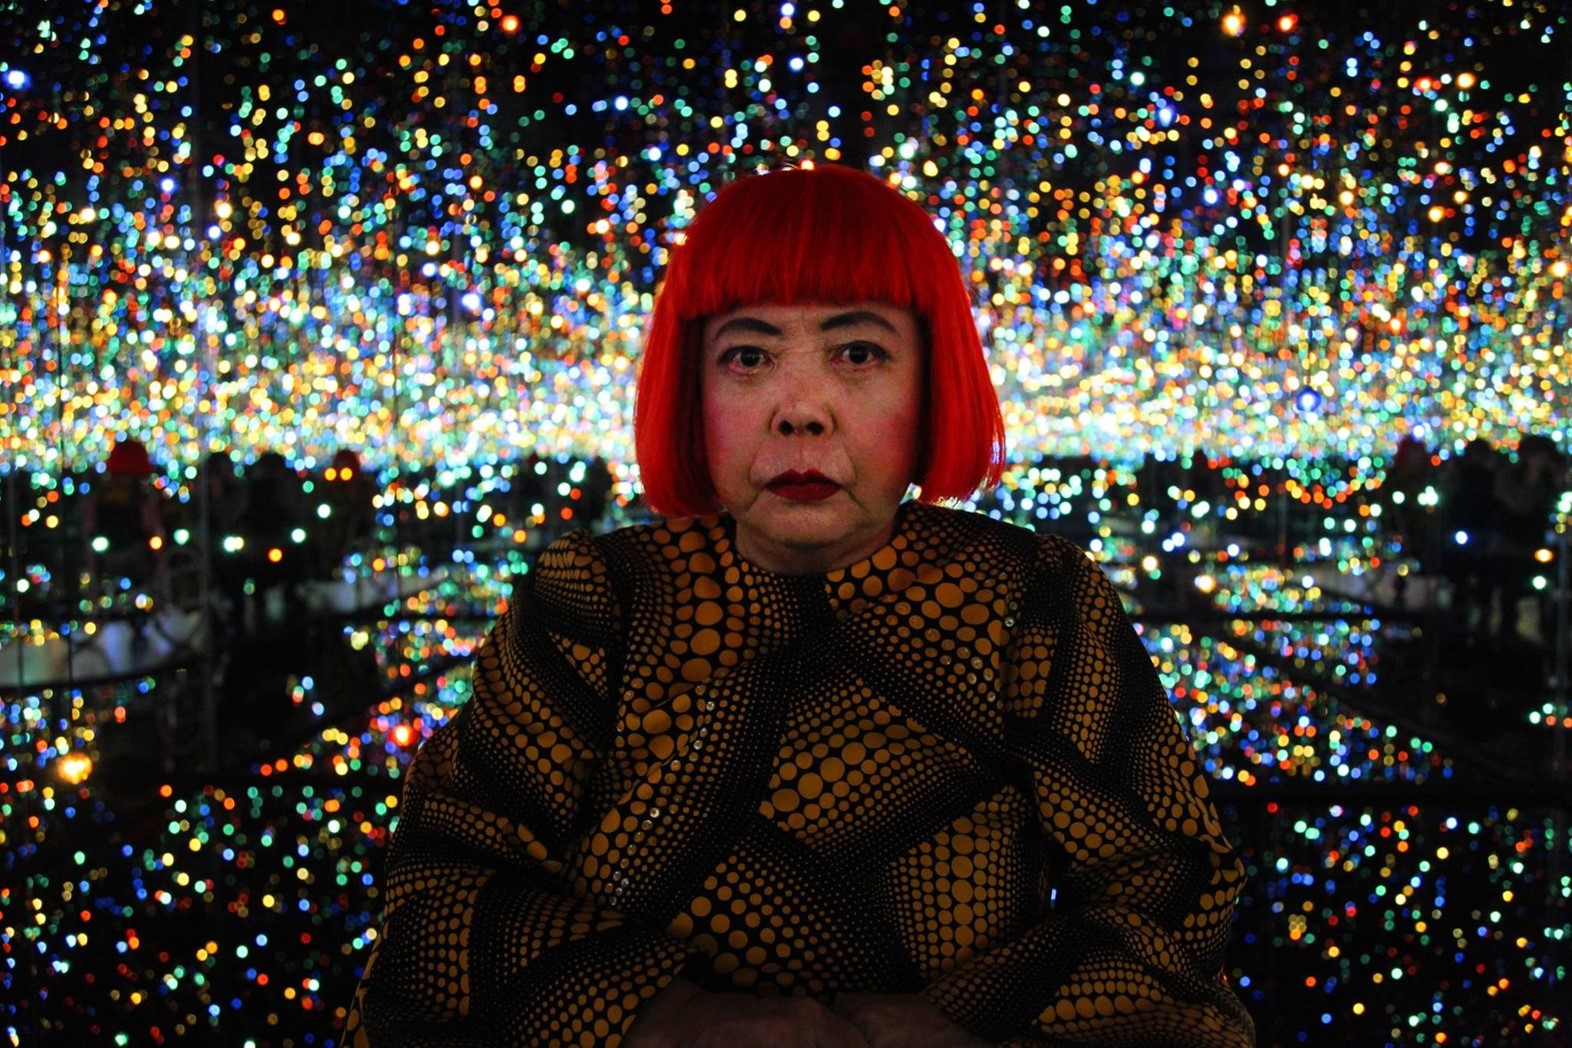 Yayoi Kusama's insanely popular infinity rooms return to New York this fall